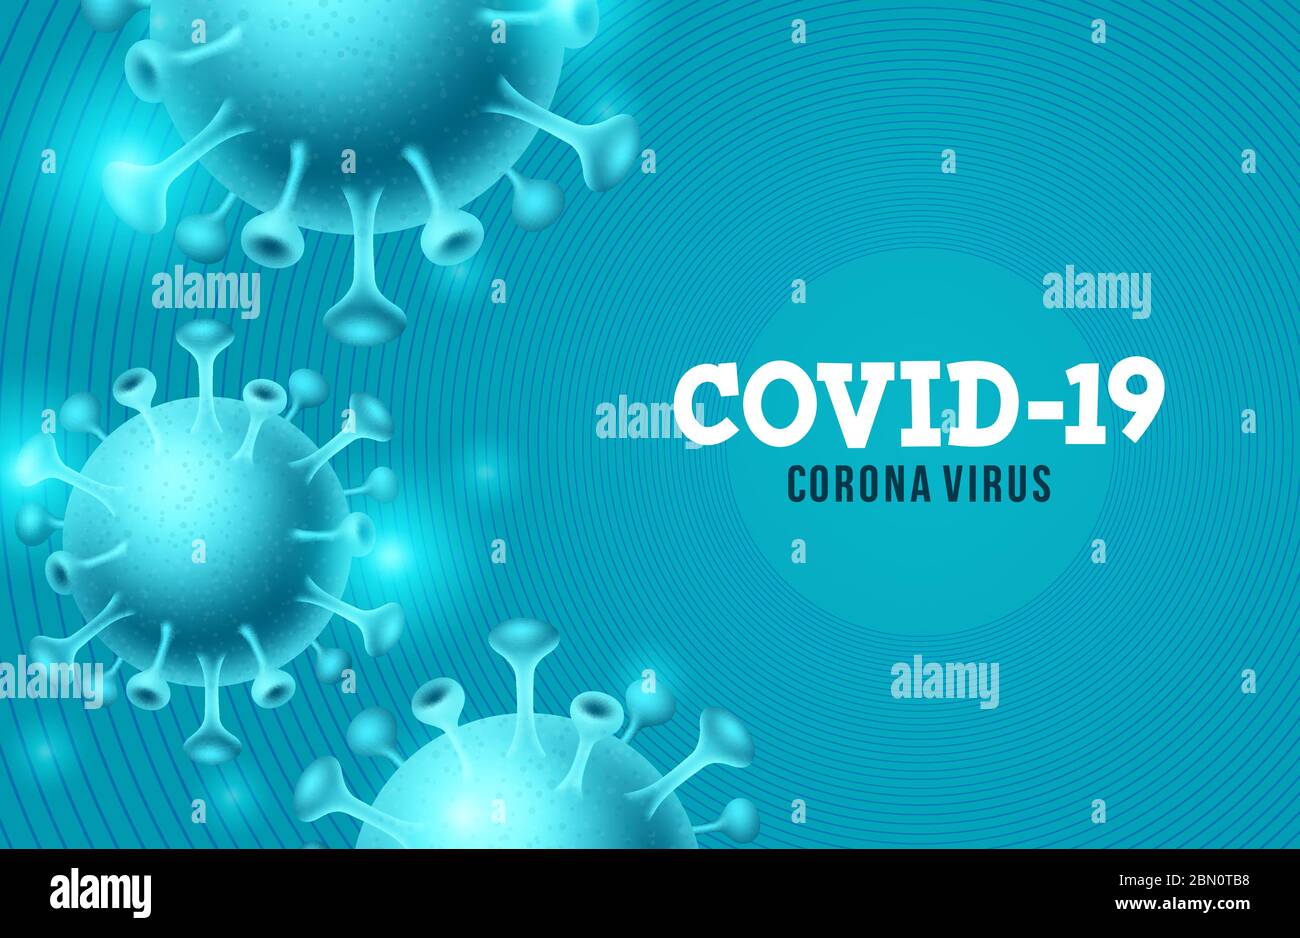 Covid-19 Corona Virus Vektor Hintergrund. Covid-19 Coronavirus Text in blauem Hintergrund mit Covid19 ncov Icons. Vektorgrafik. Stock Vektor